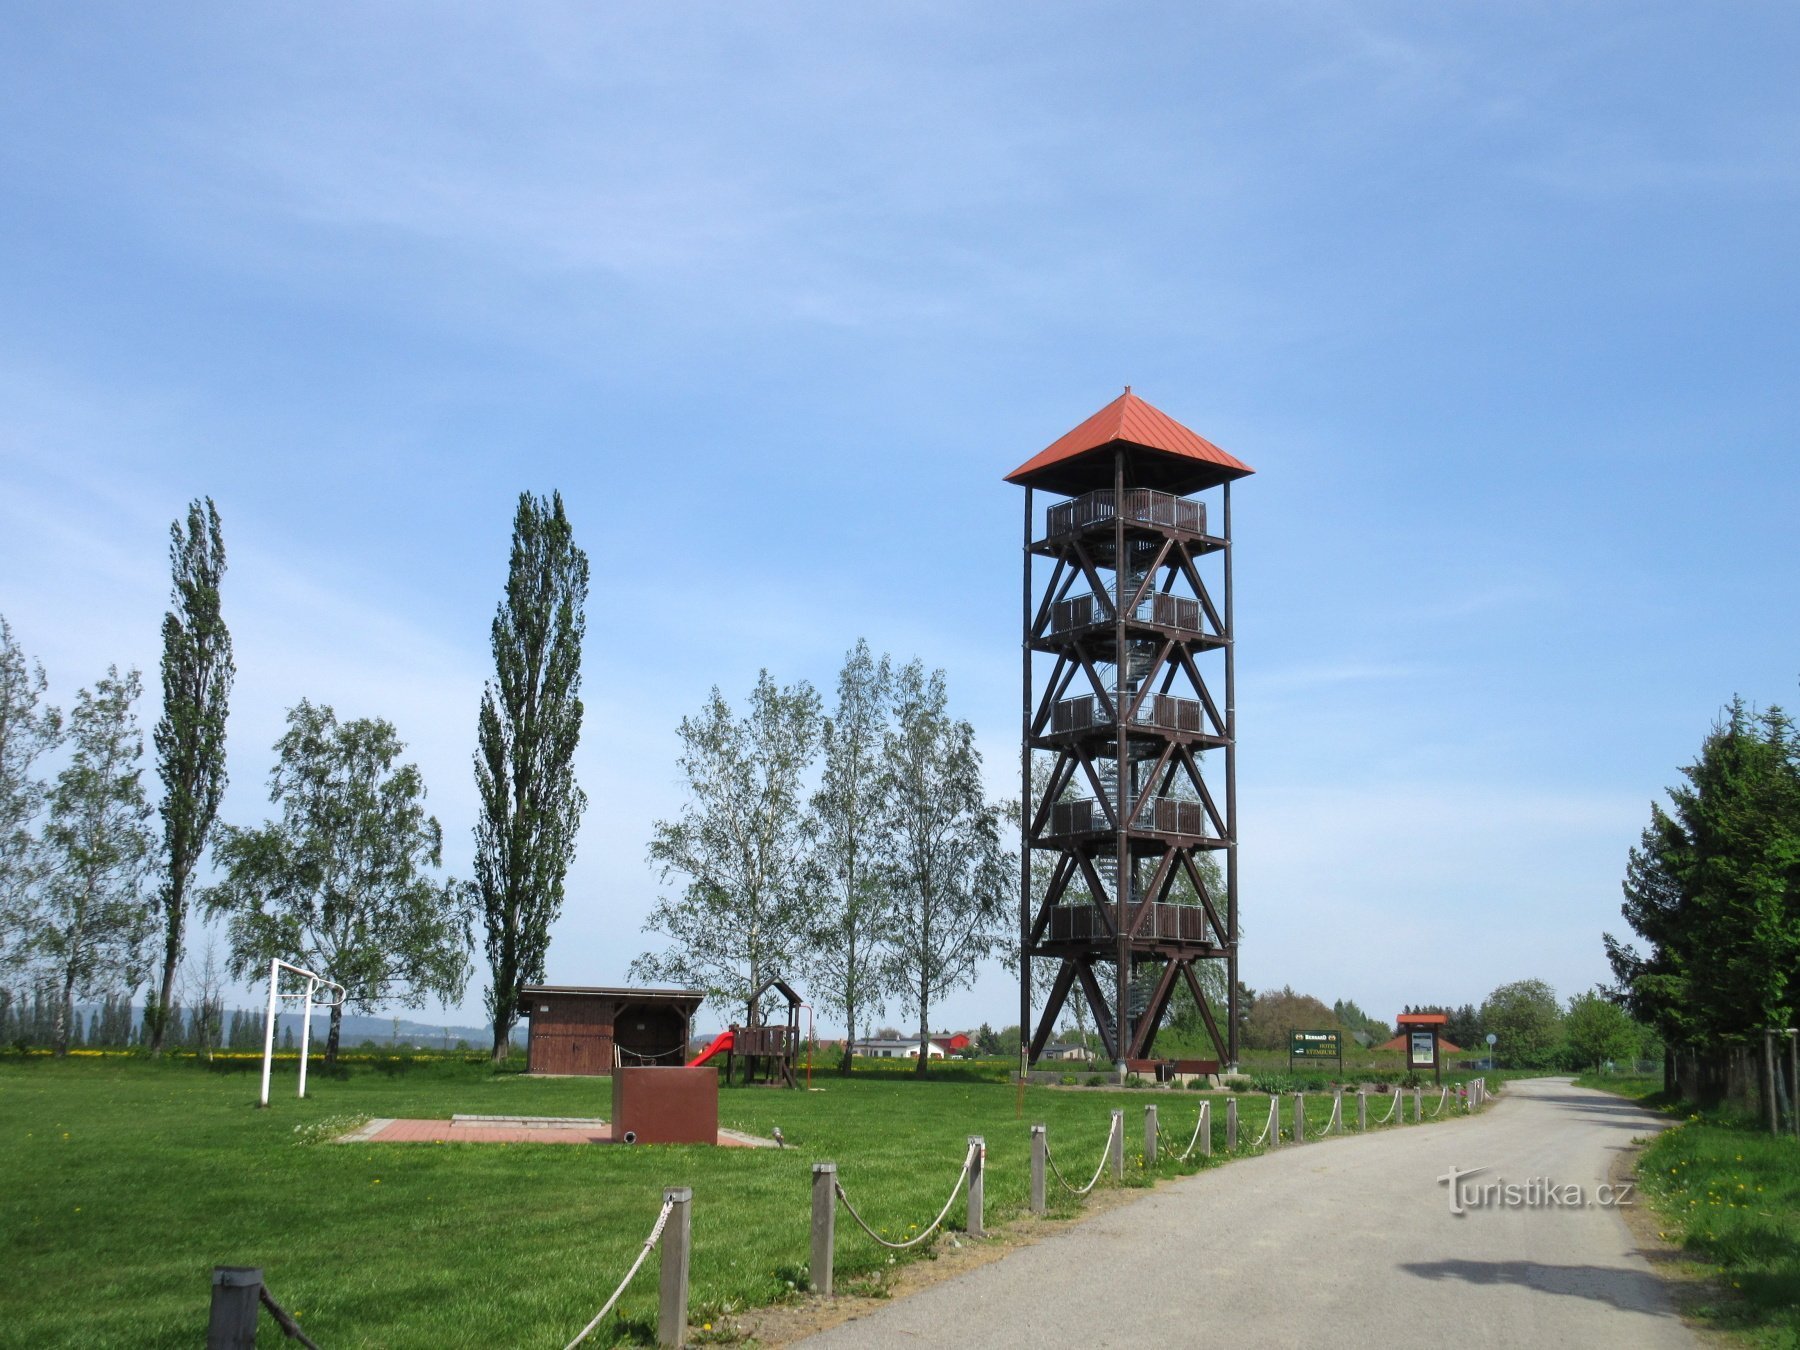 Žernov – villaggio e torre panoramica